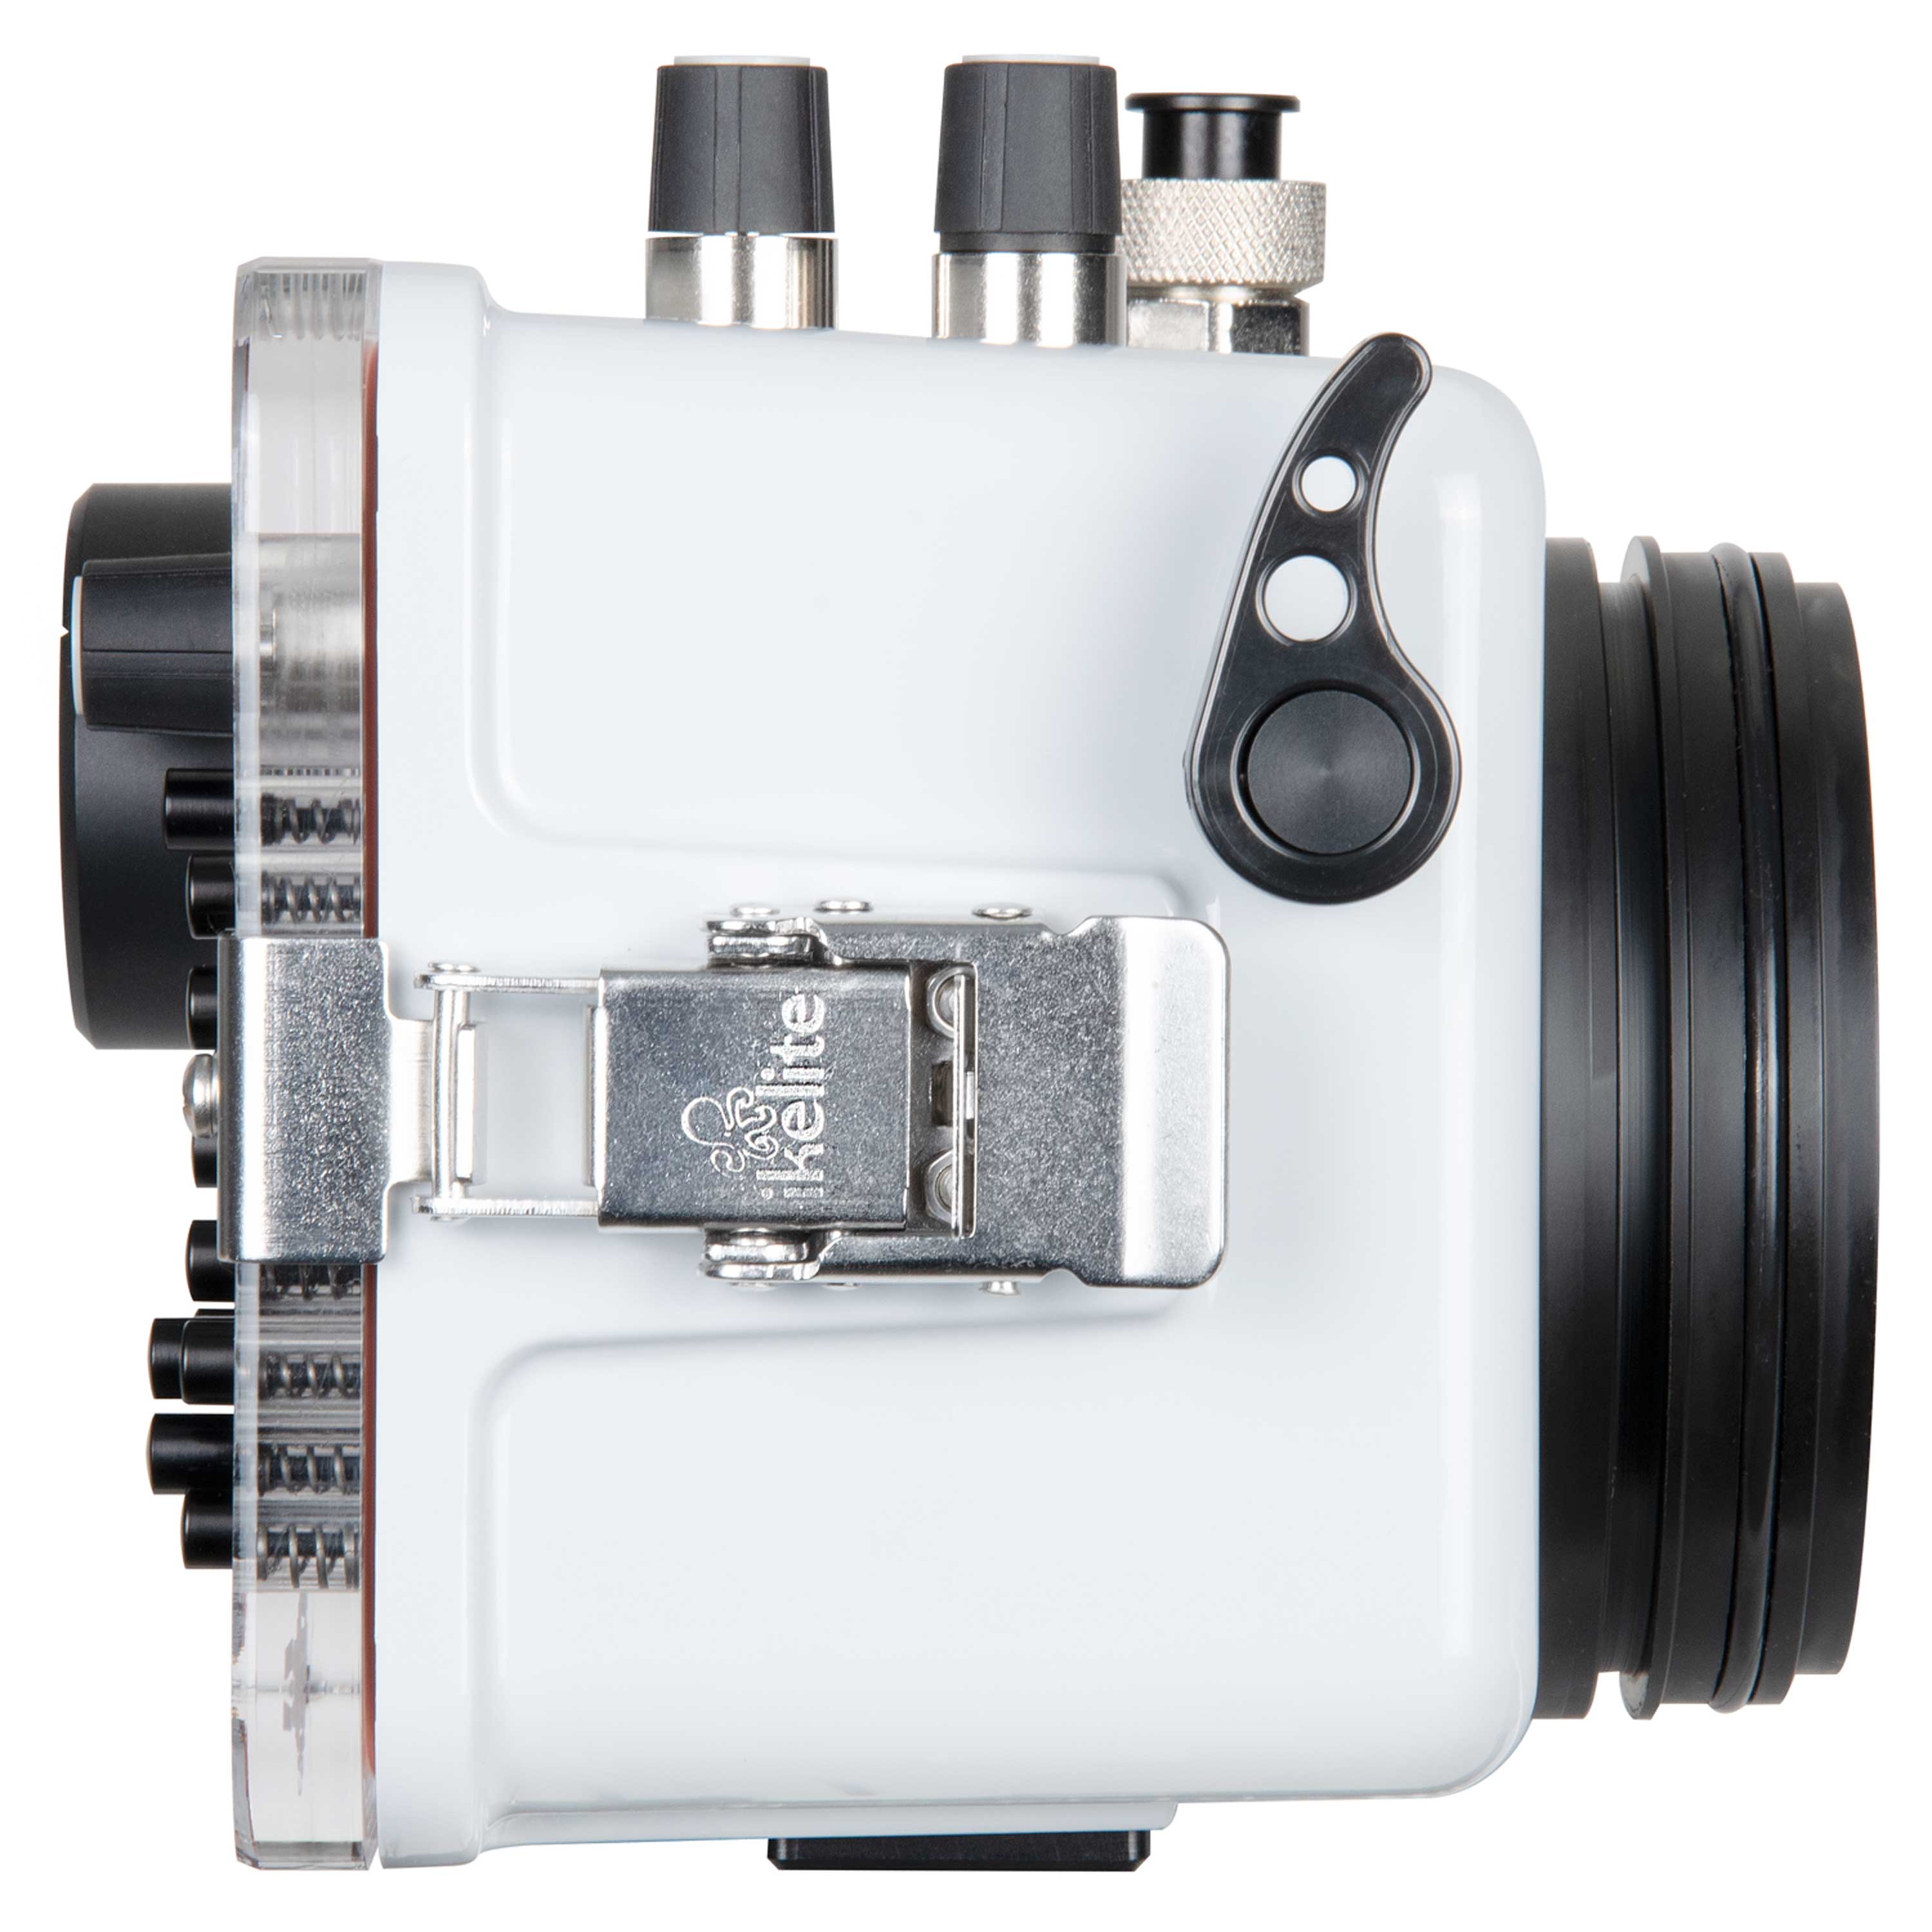 200DLM/C Underwater TTL Housing for Canon EOS 100D Rebel SL1 DSLR Cameras